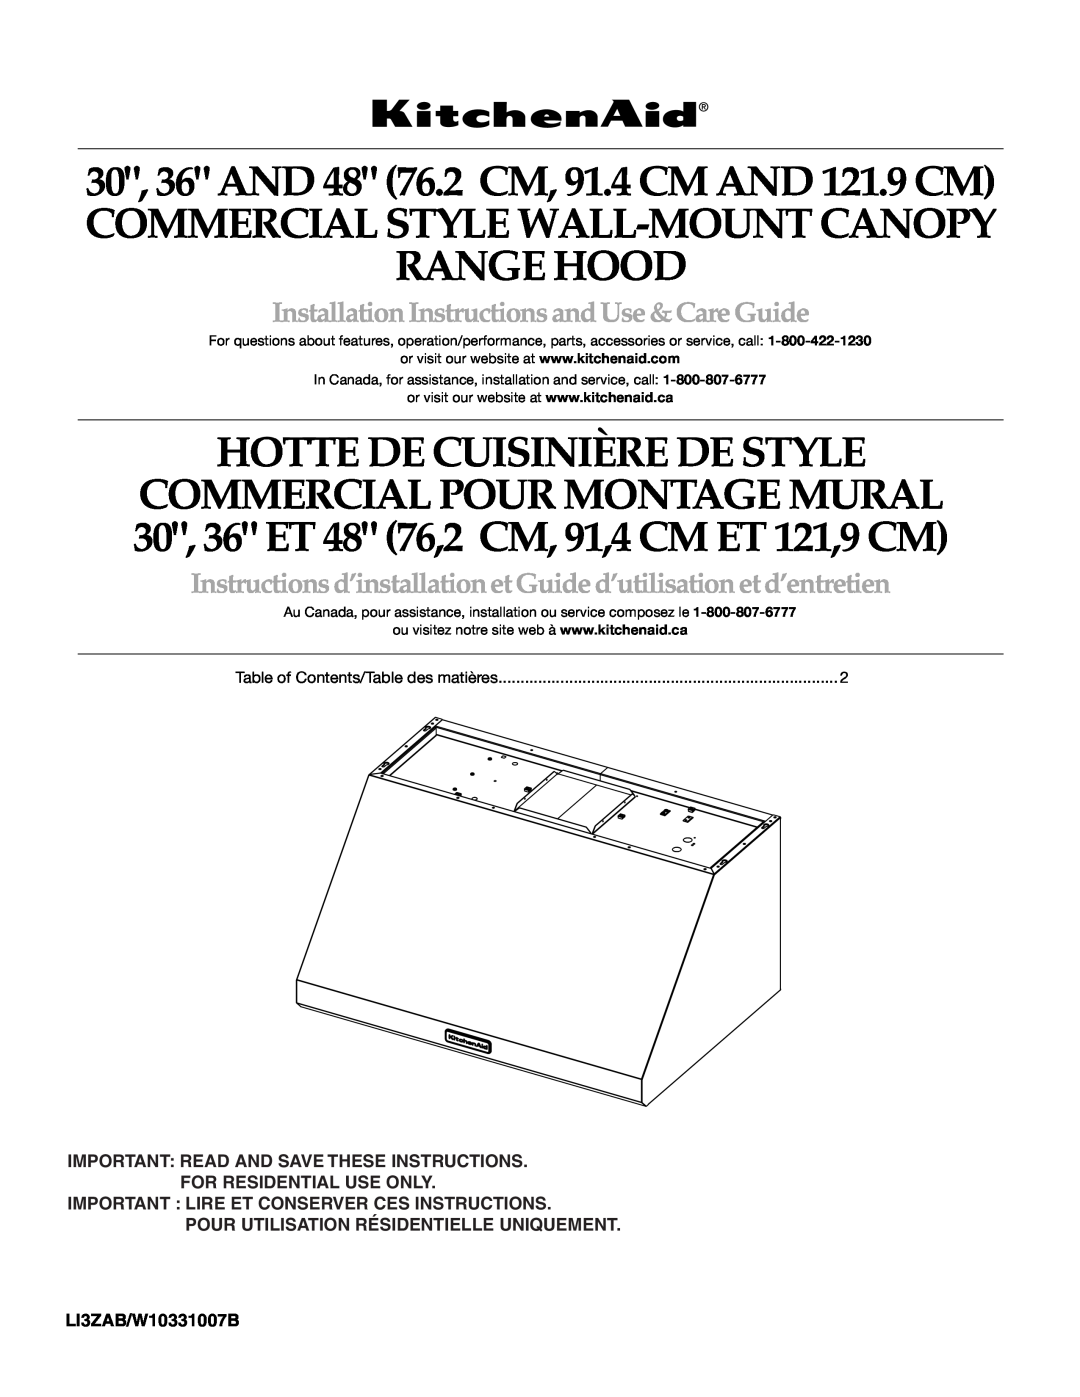 KitchenAid installation instructions Commercial Style Wall-Mount Canopy Range Hood, LI3ZAB/W10331007B 